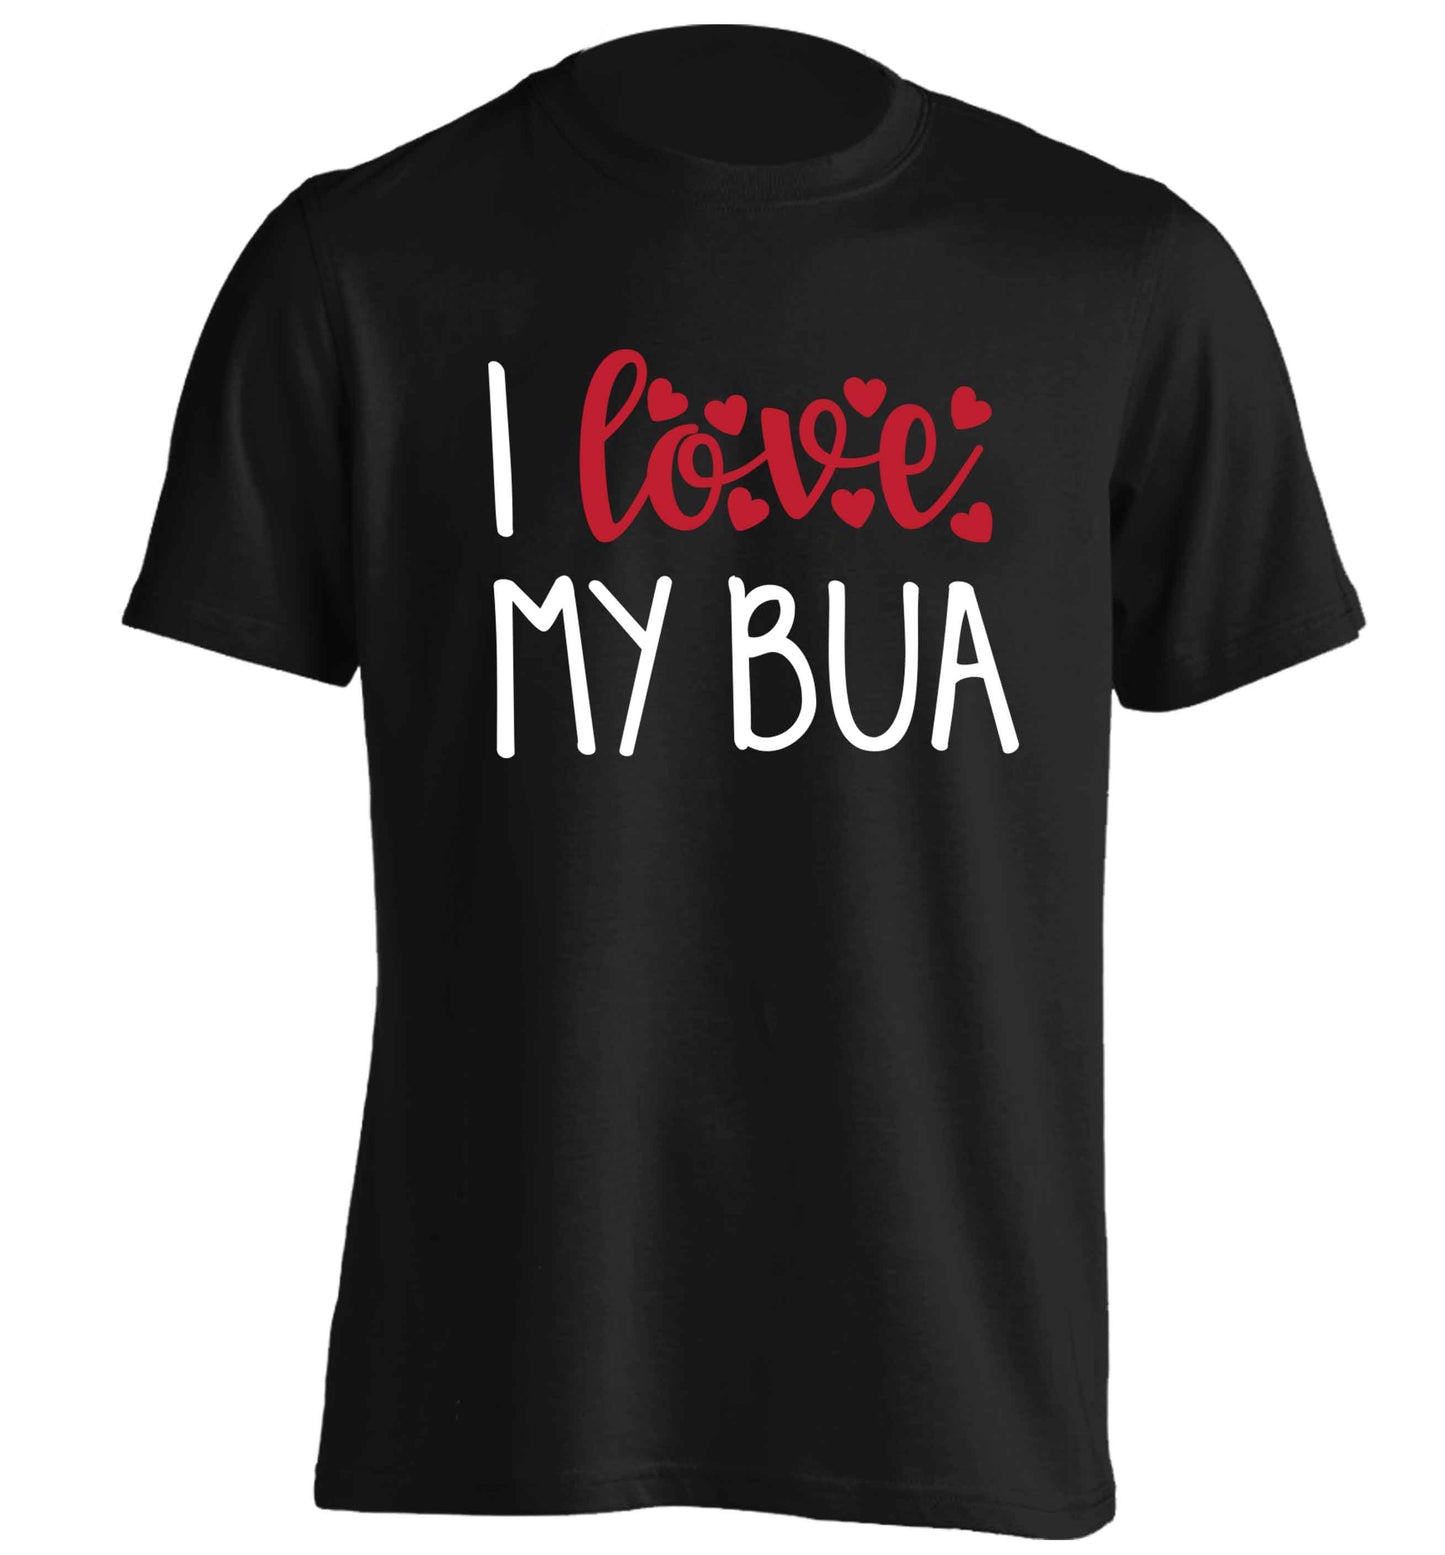 I love my bua adults unisex black Tshirt 2XL